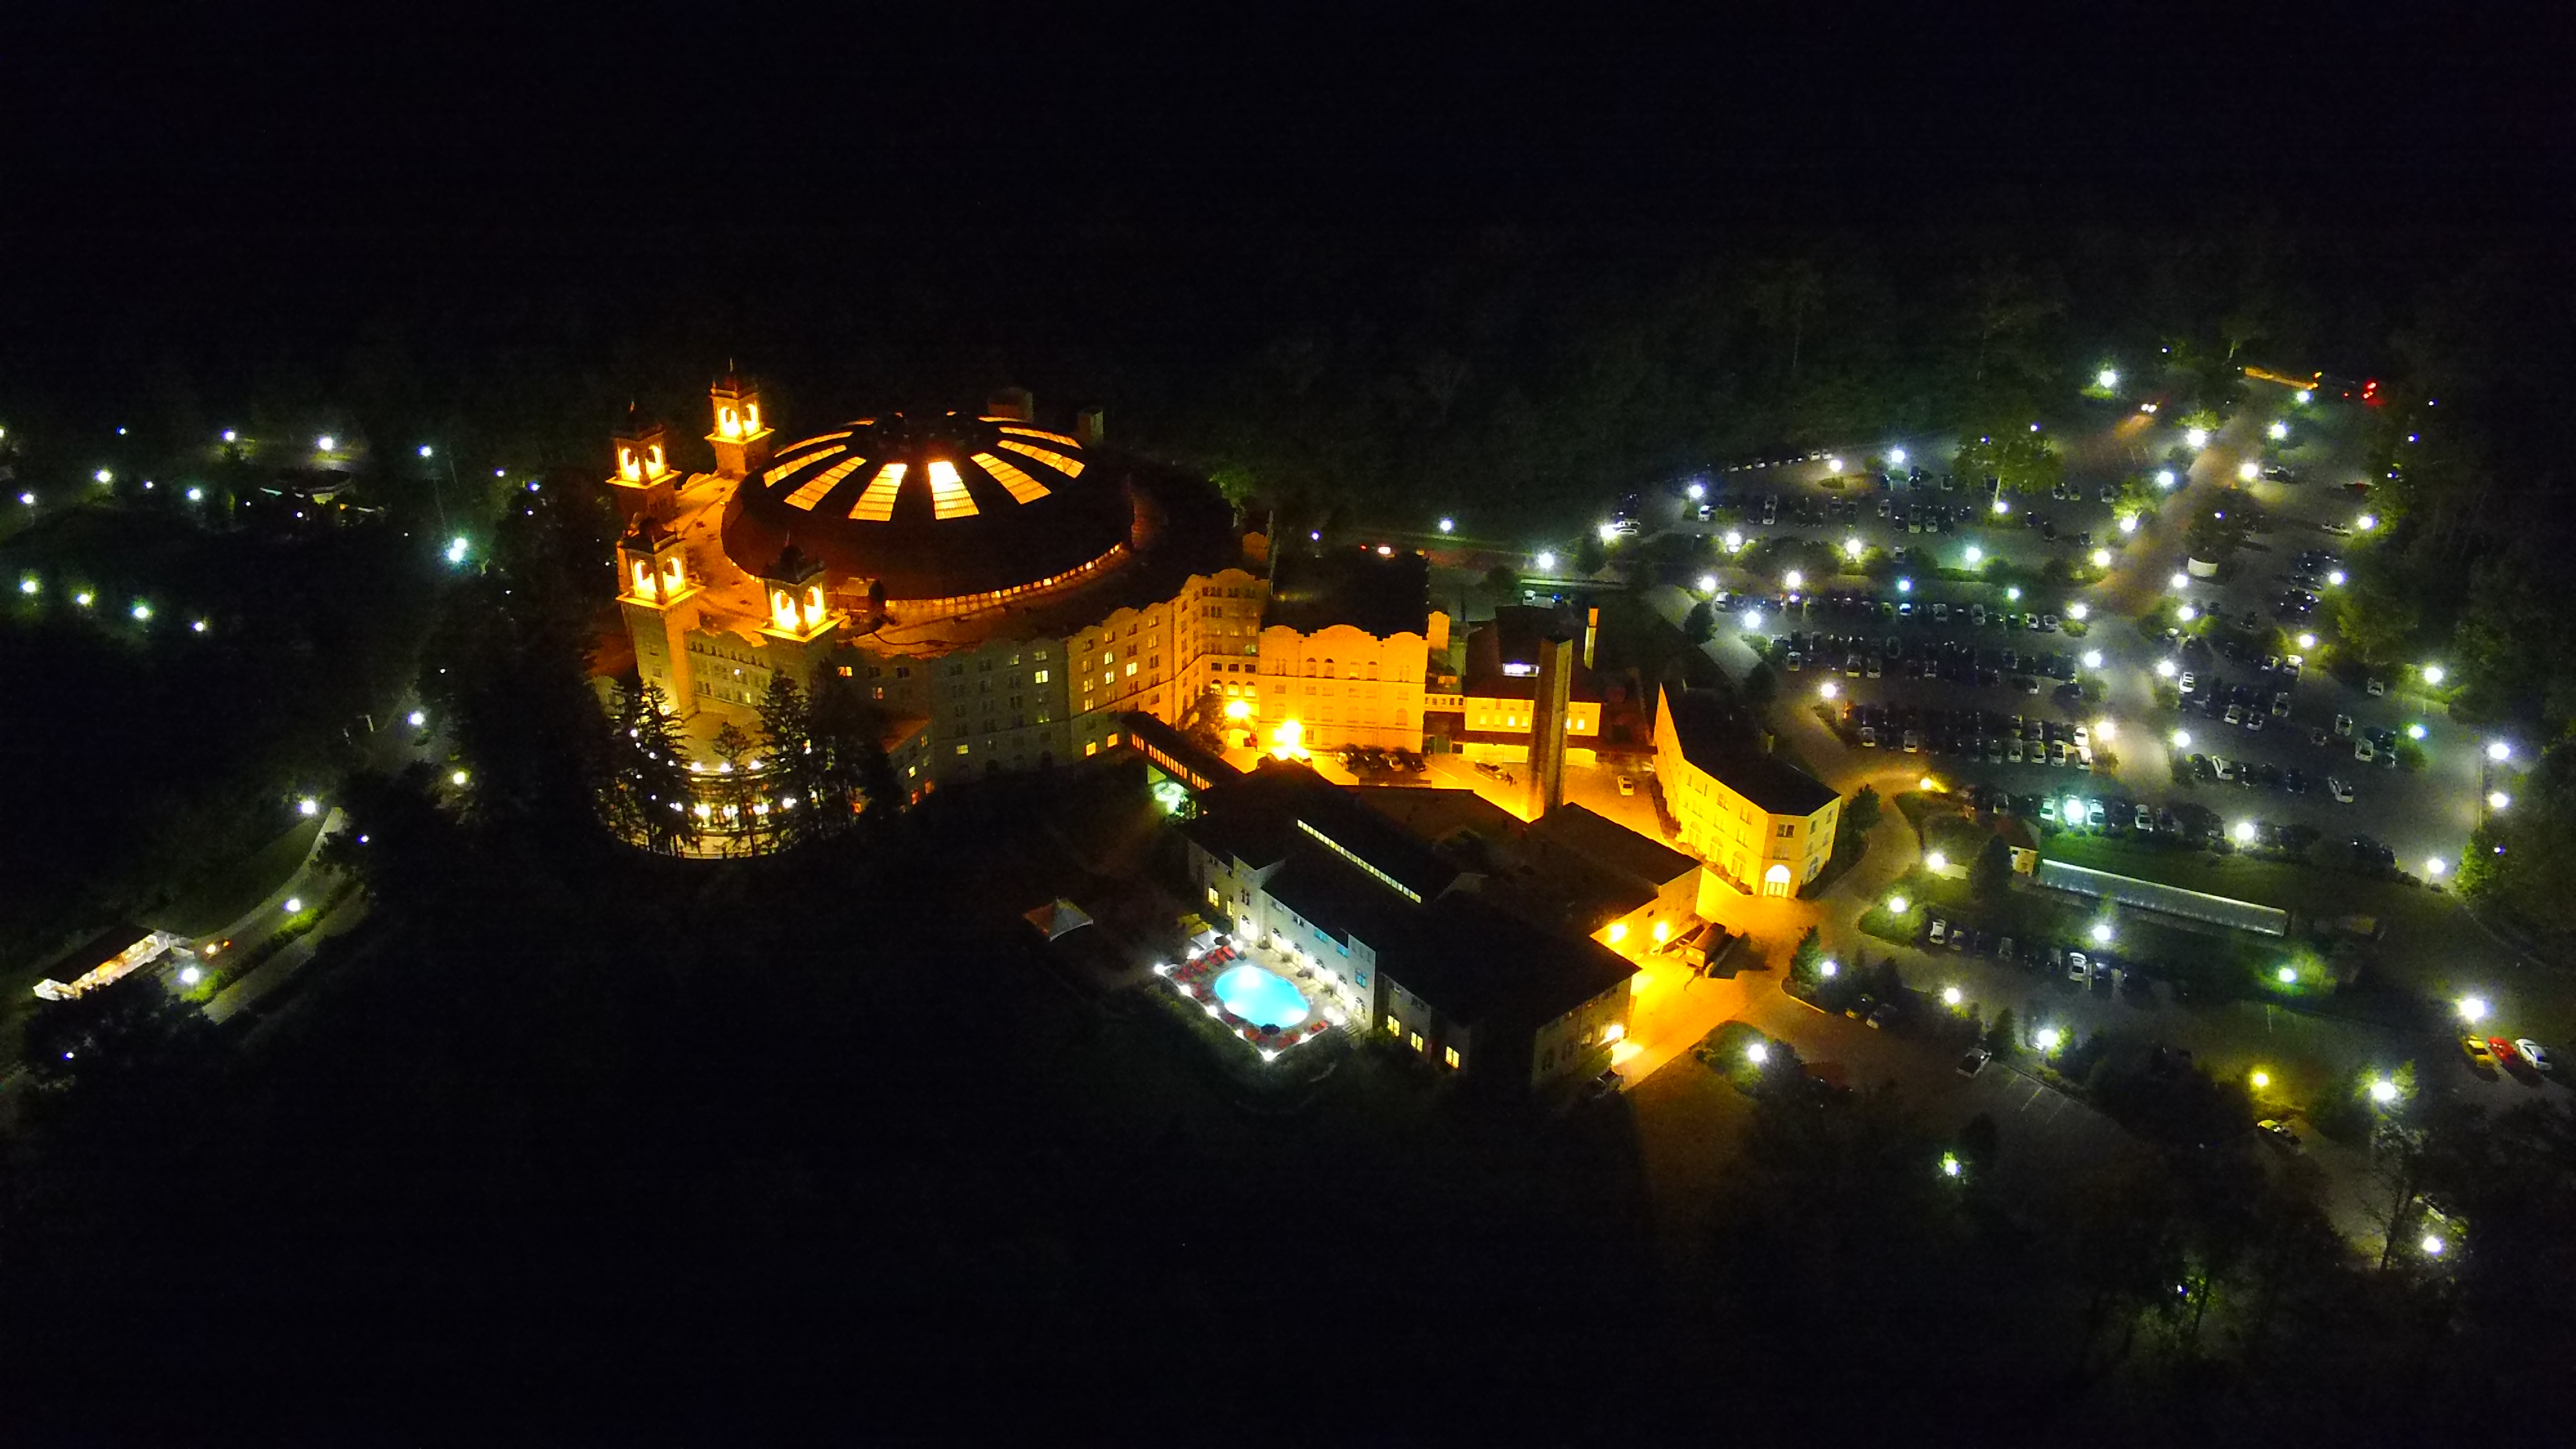 The Hotel at night.JPG